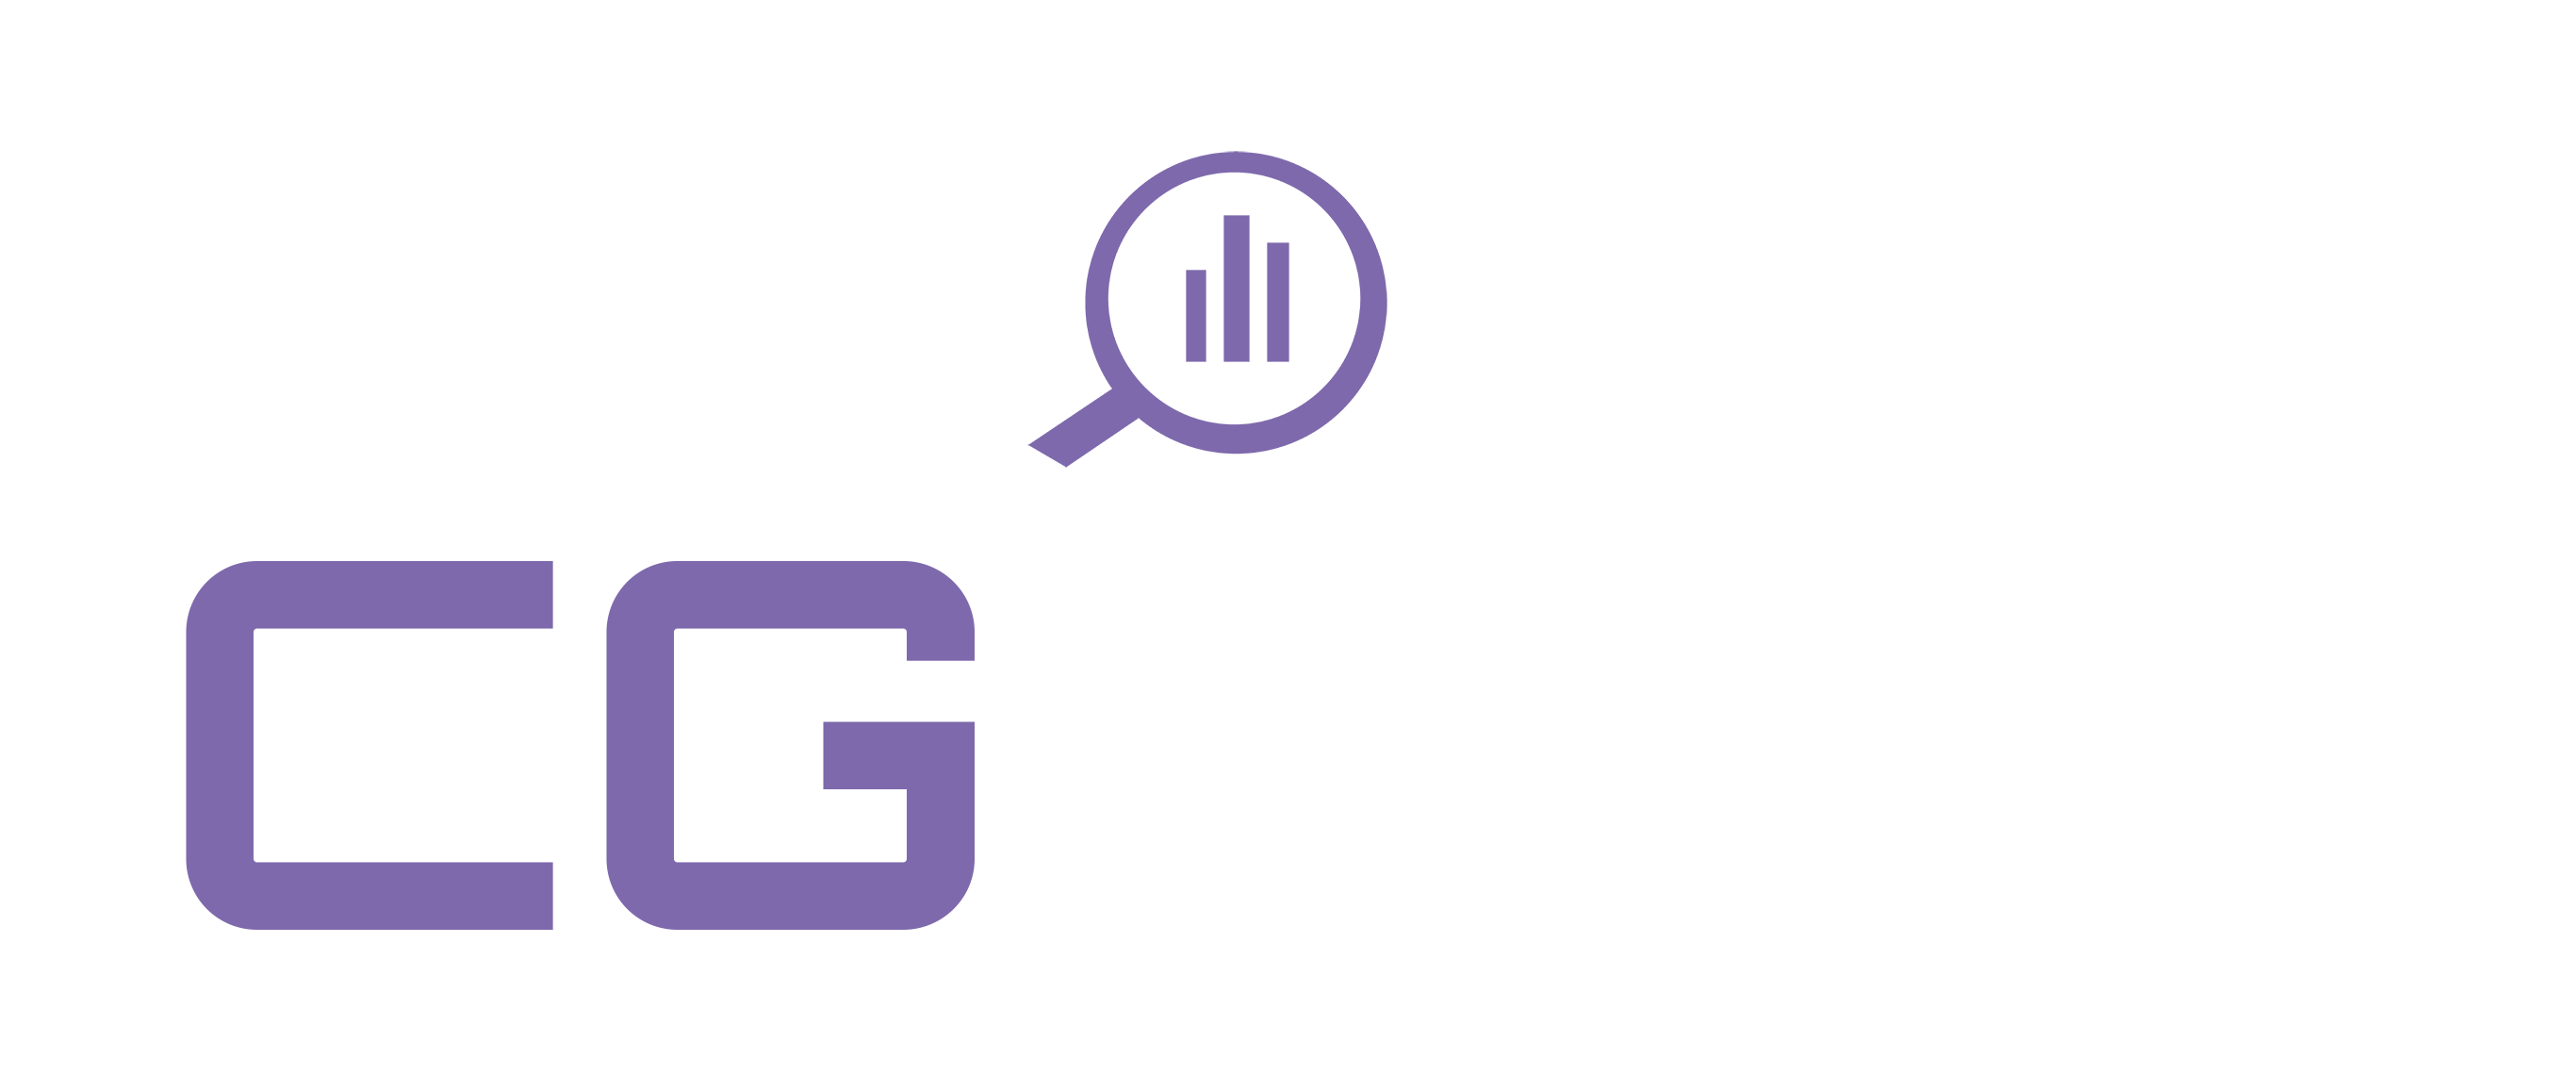 CGMAK logo